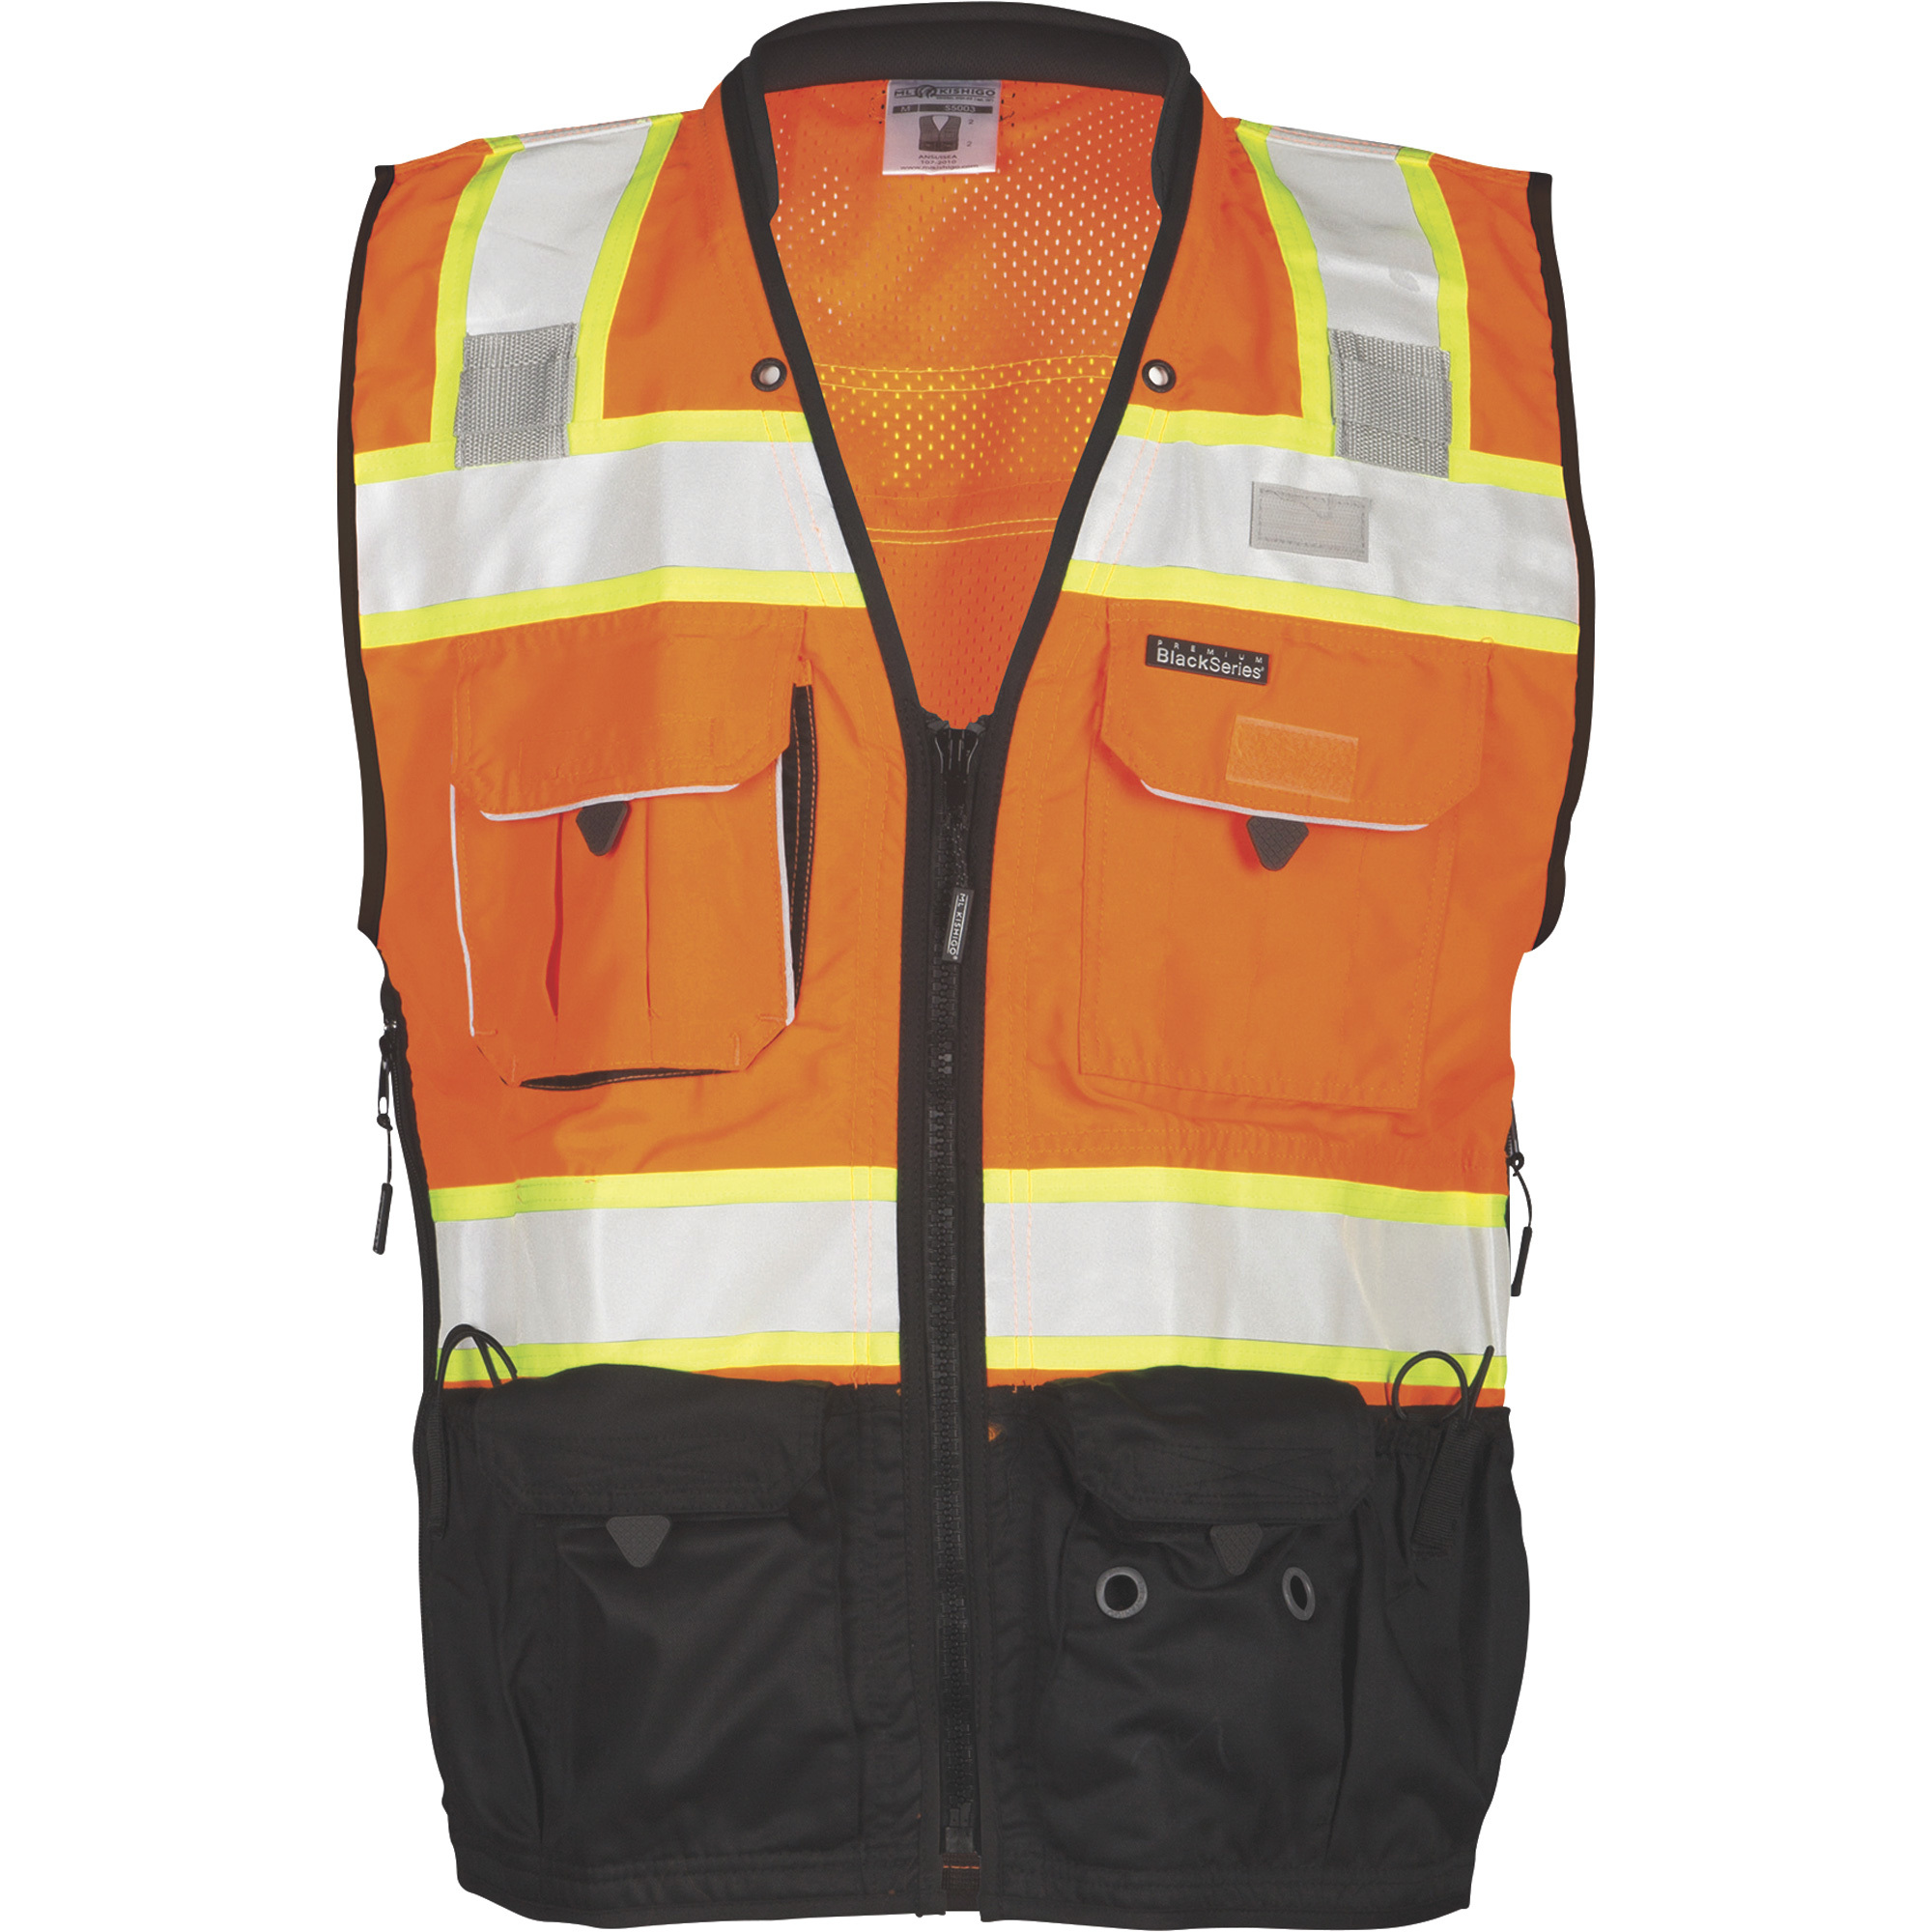 ML Kishigo Men's Class 2 High Visibility Premium Black Series Surveyors Safety Vest â Orange/Black, 3XL, Model S5000